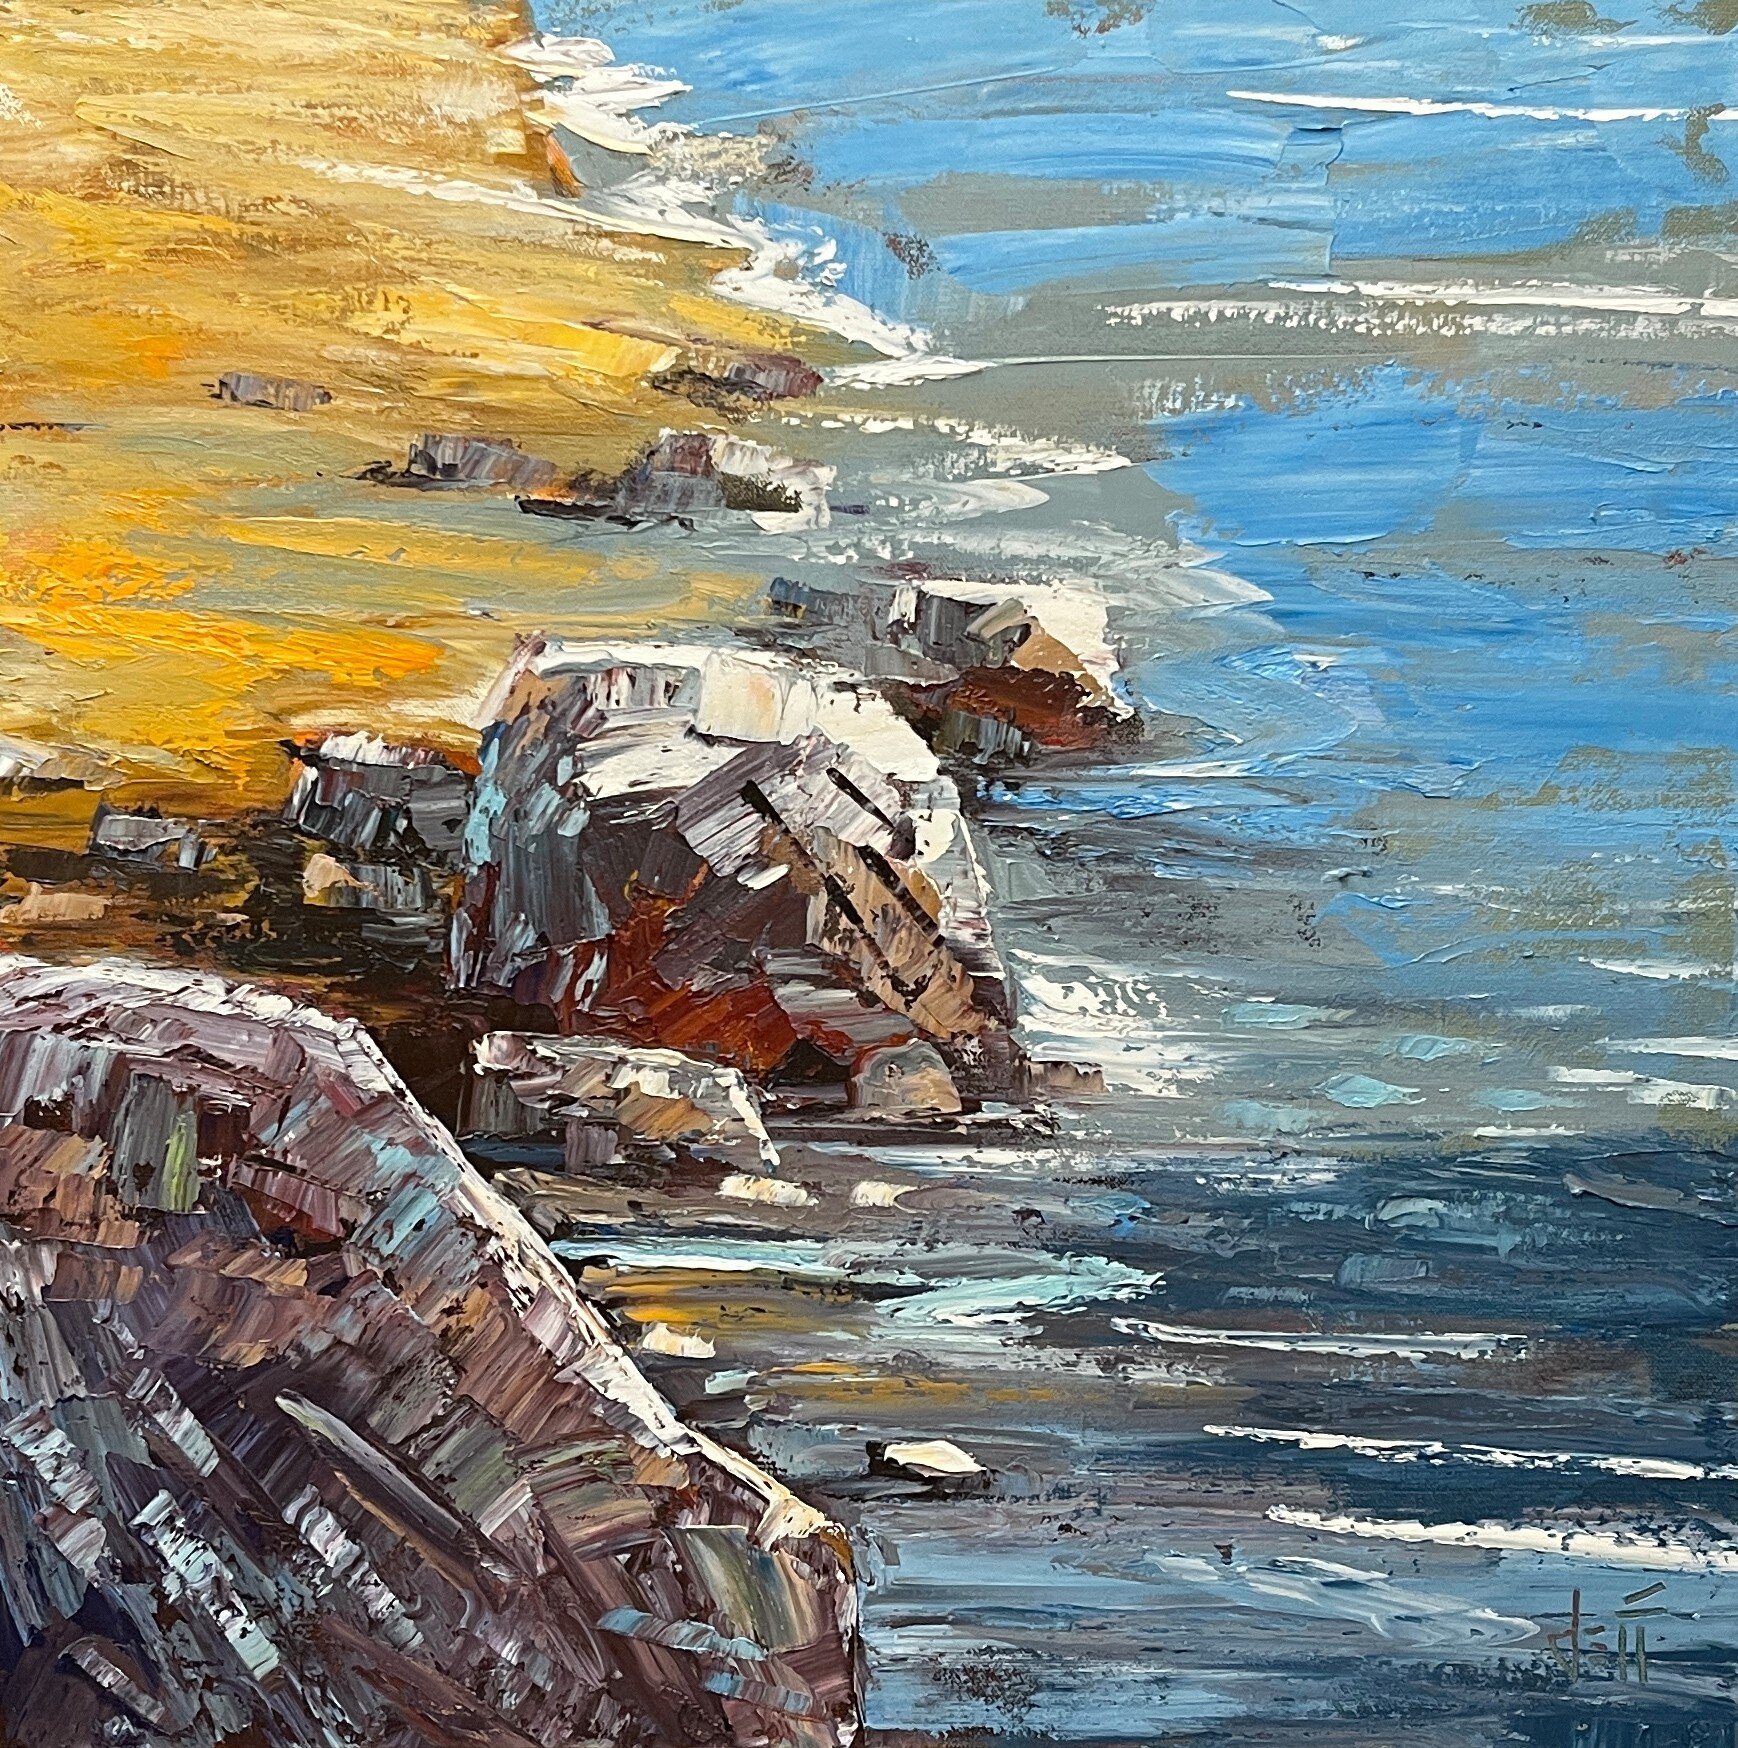  Water’s Edge-oil on canvas 24” x 24”   Idea Gallery 